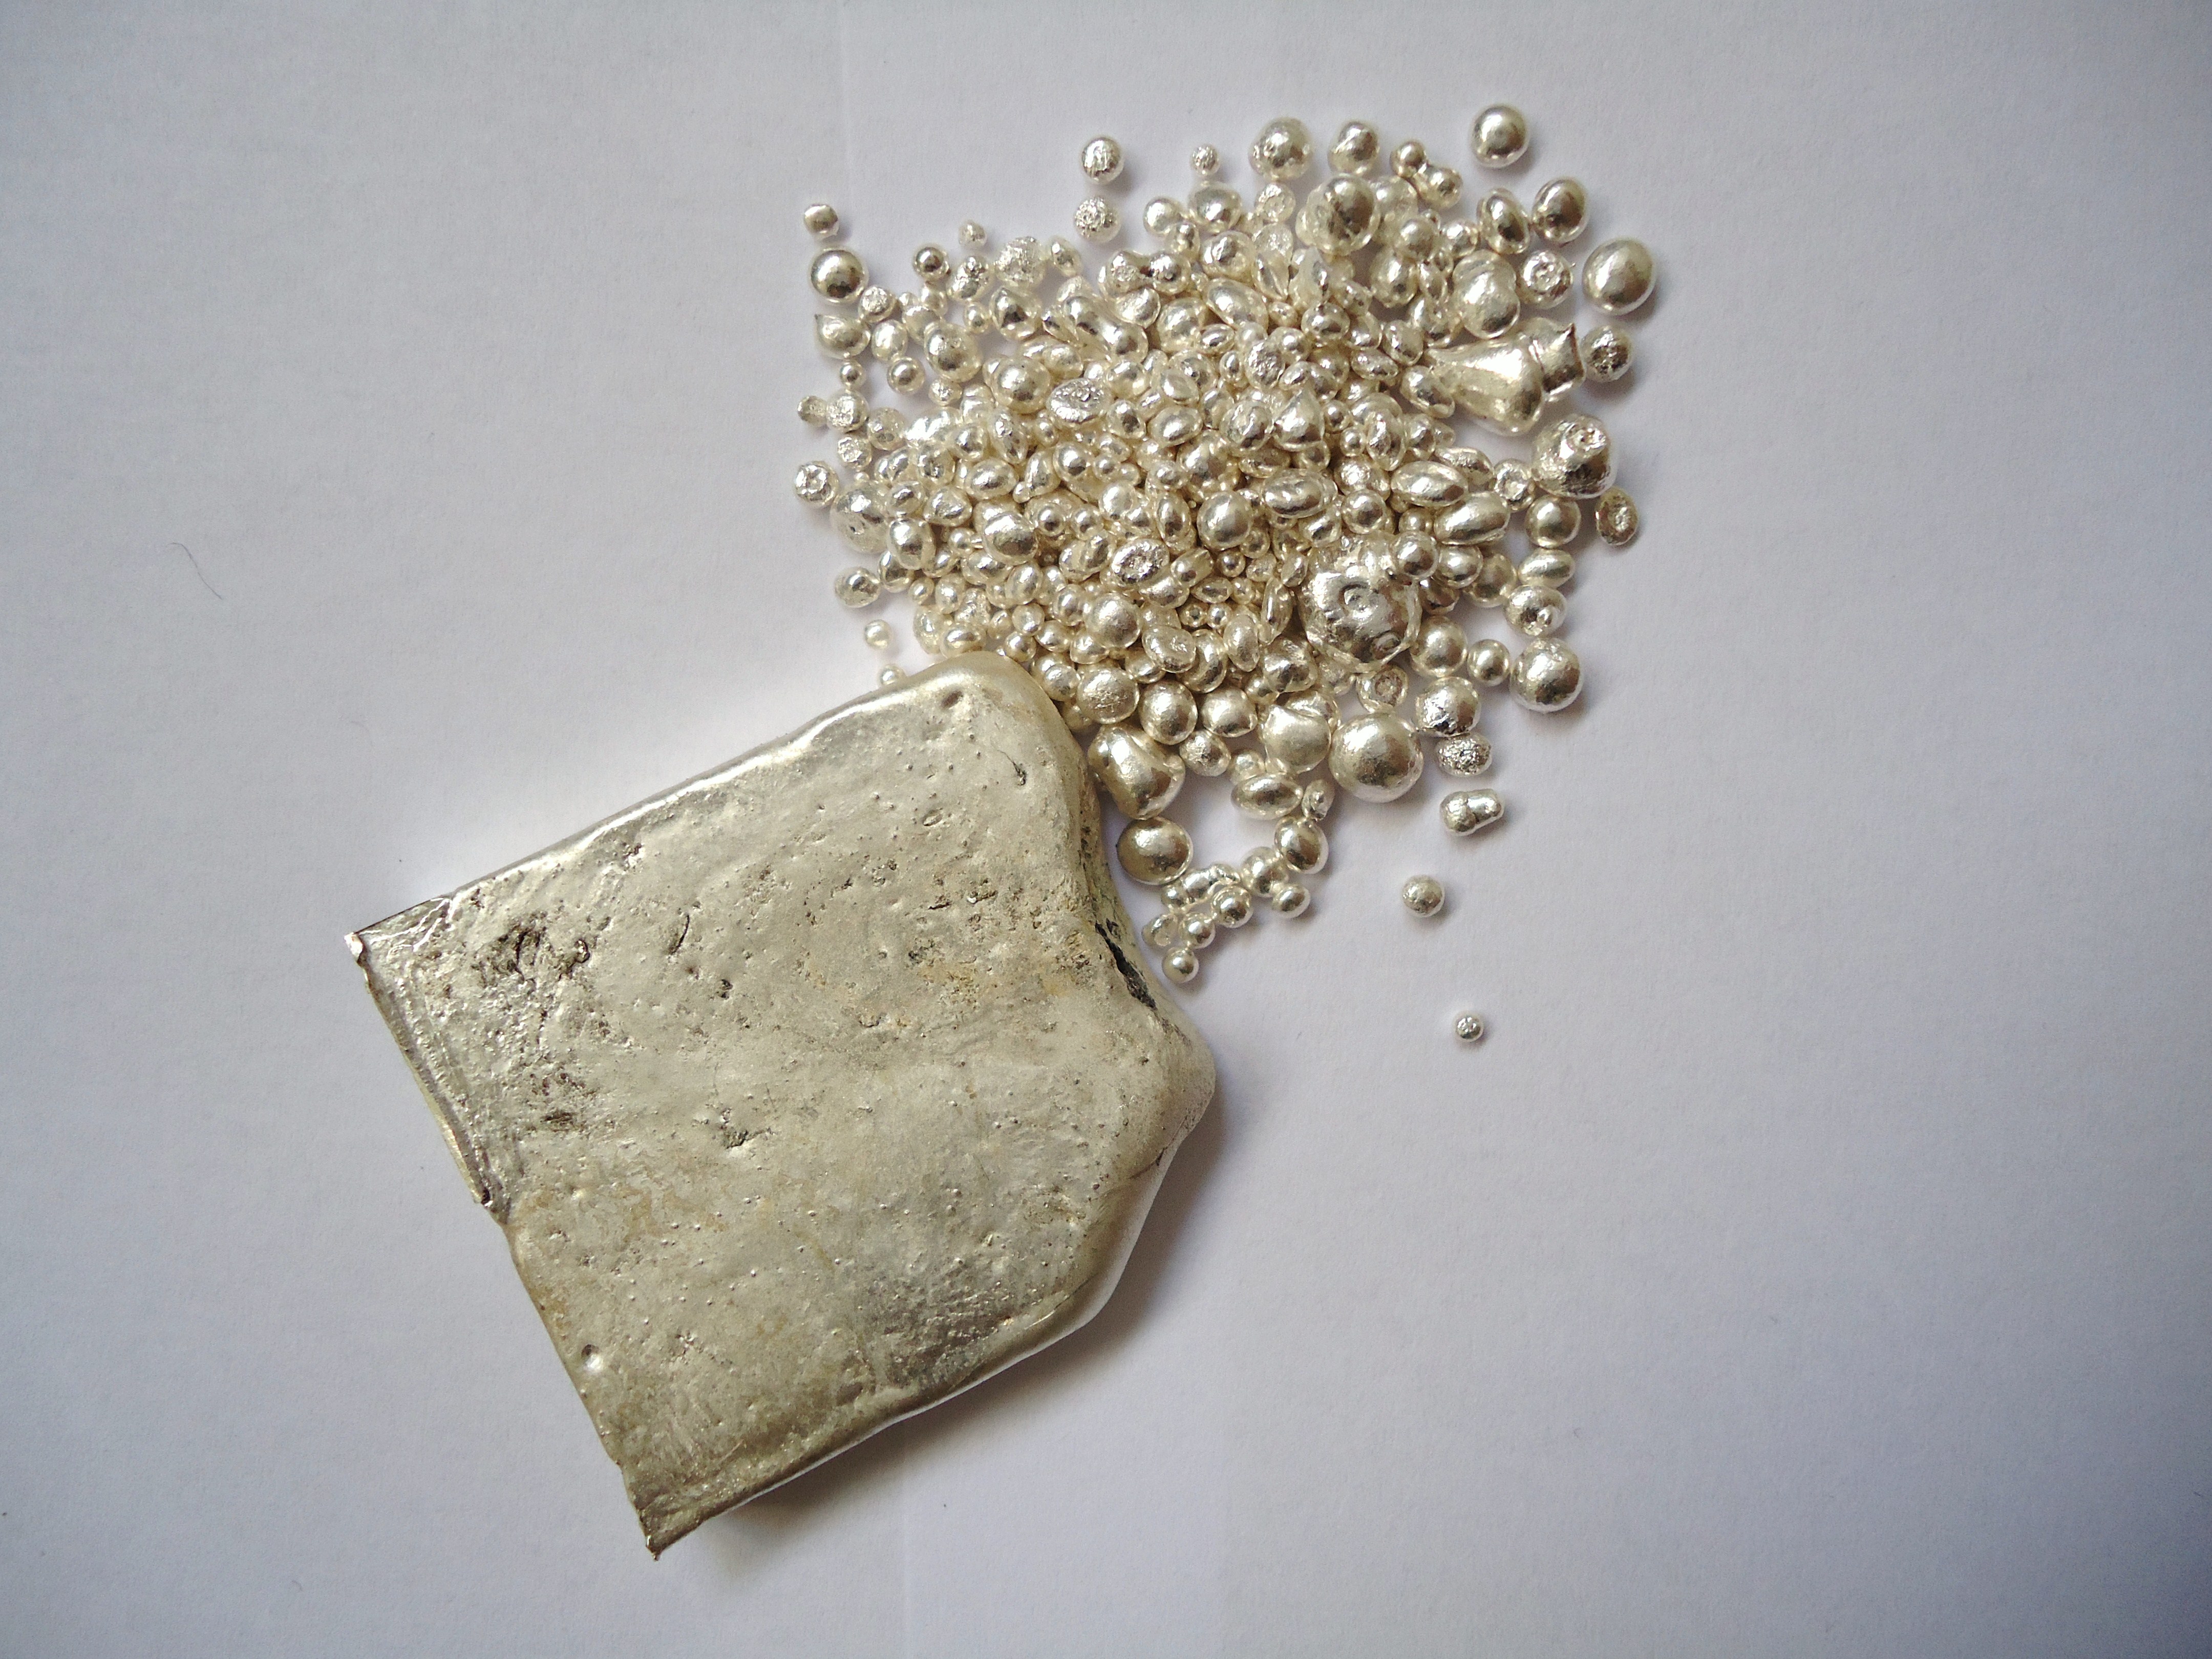 Silver ingot and granules